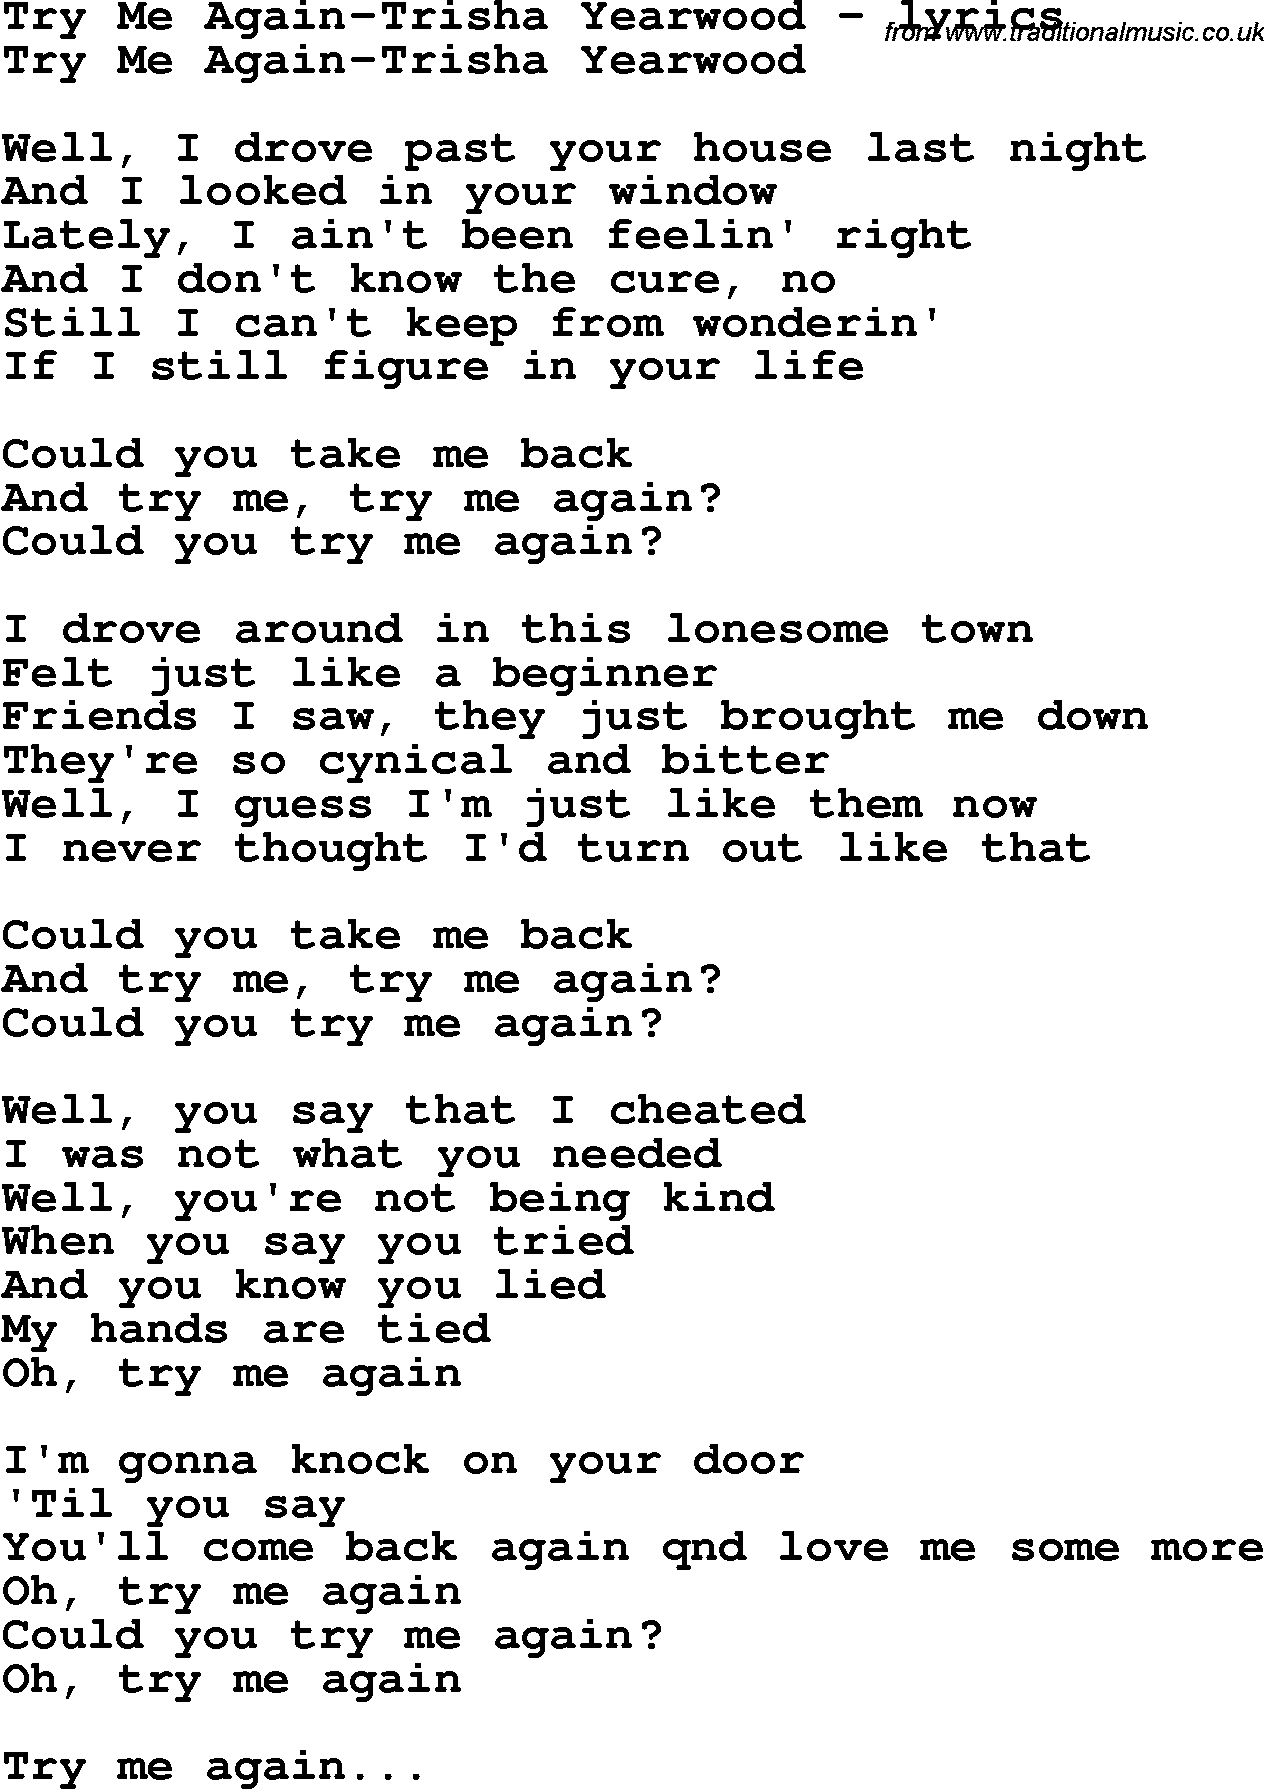 Love Song Lyrics for: Try Me Again-Trisha Yearwood